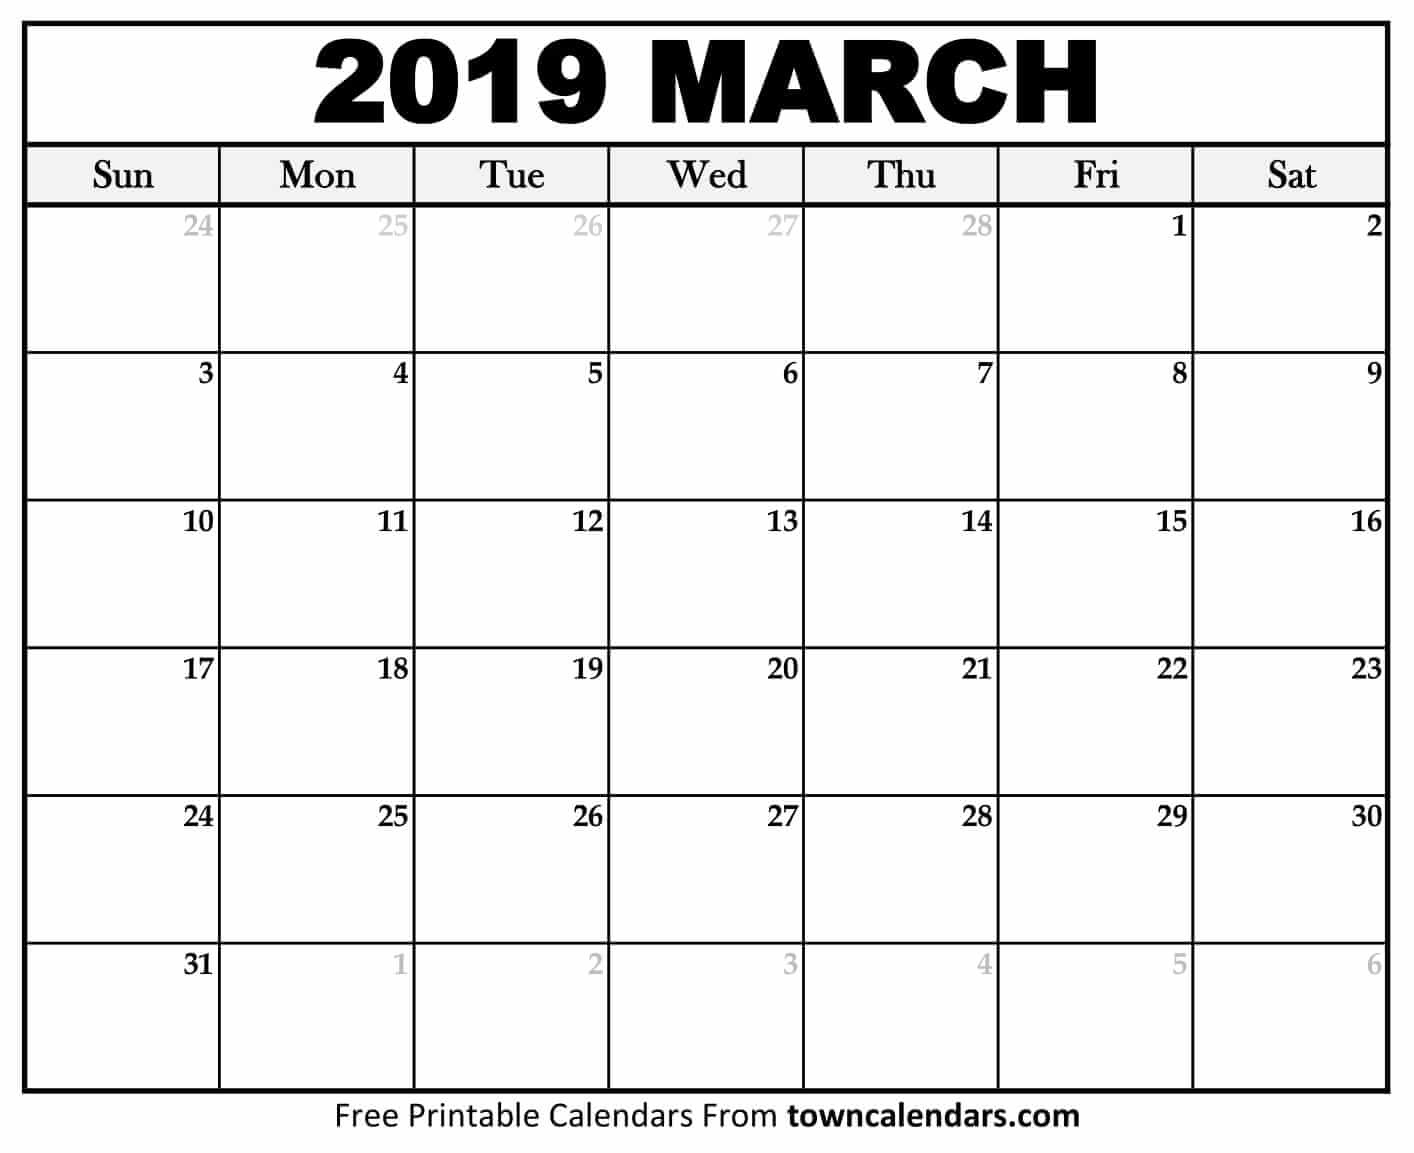 Printable March 2019 Calendar - Towncalendars - Free Printable March Activities